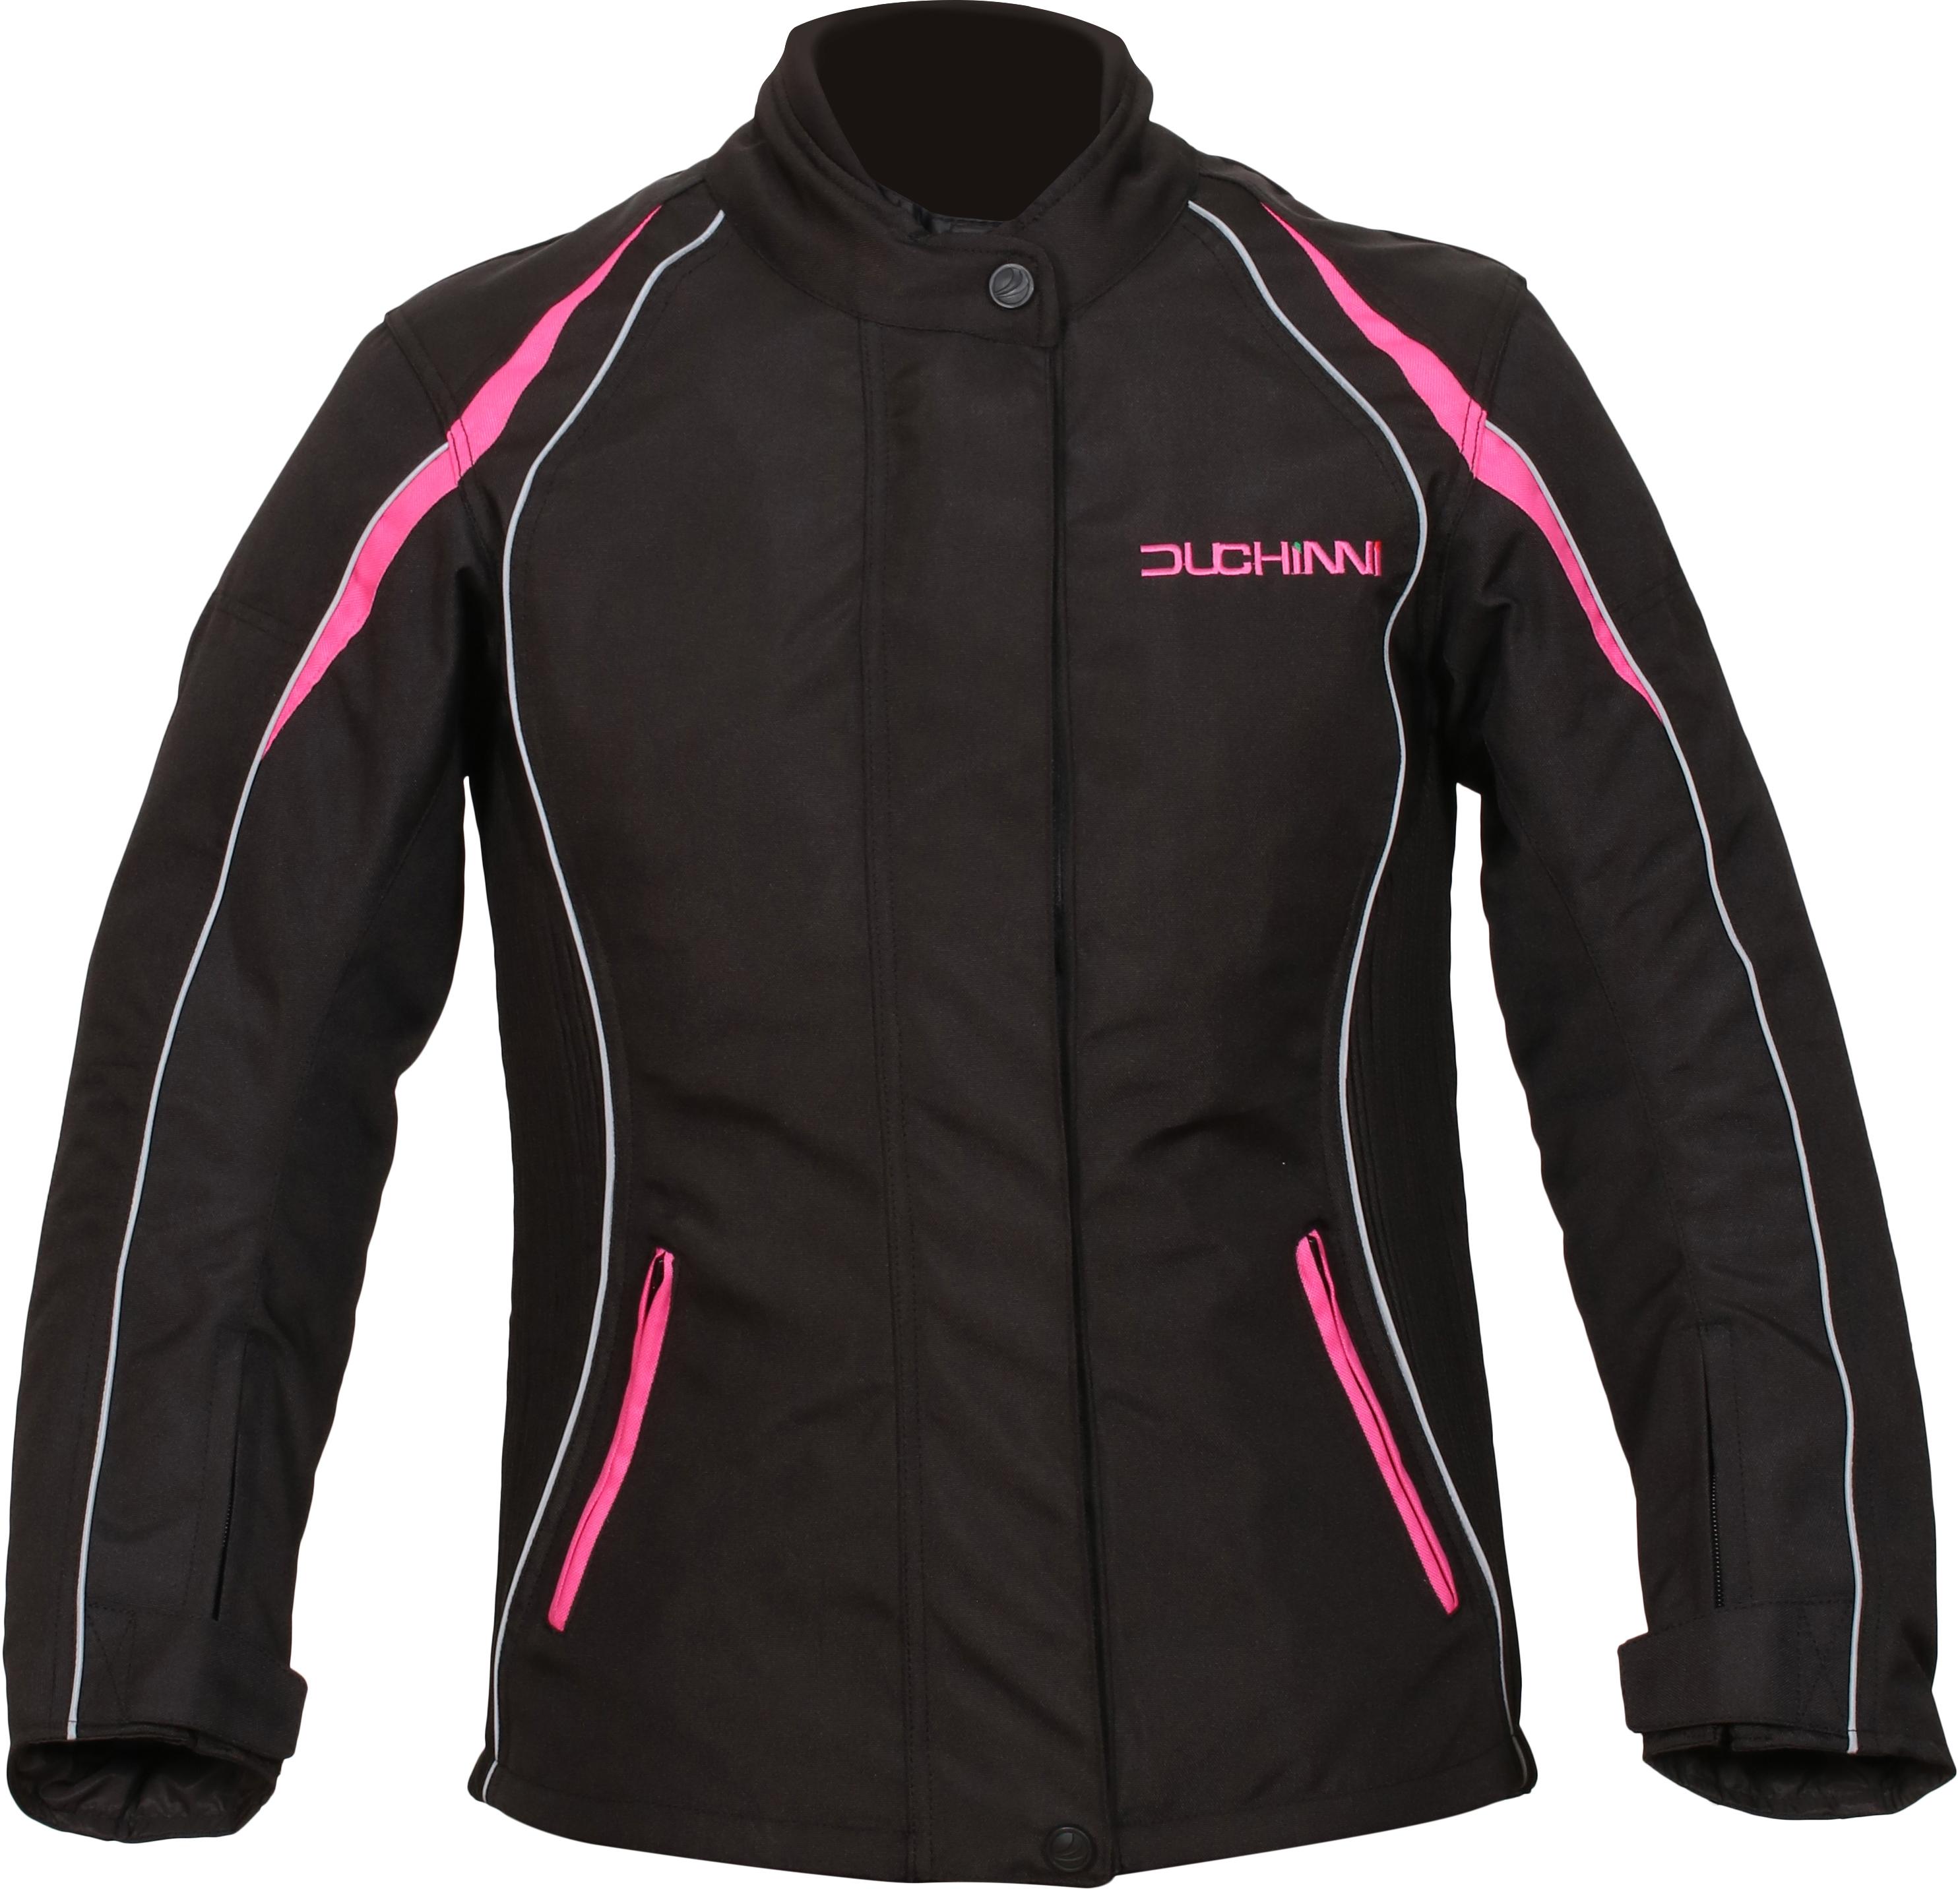 Duchinni Vienna Ladies Motorcycle Jacket - Black And Pink, 18